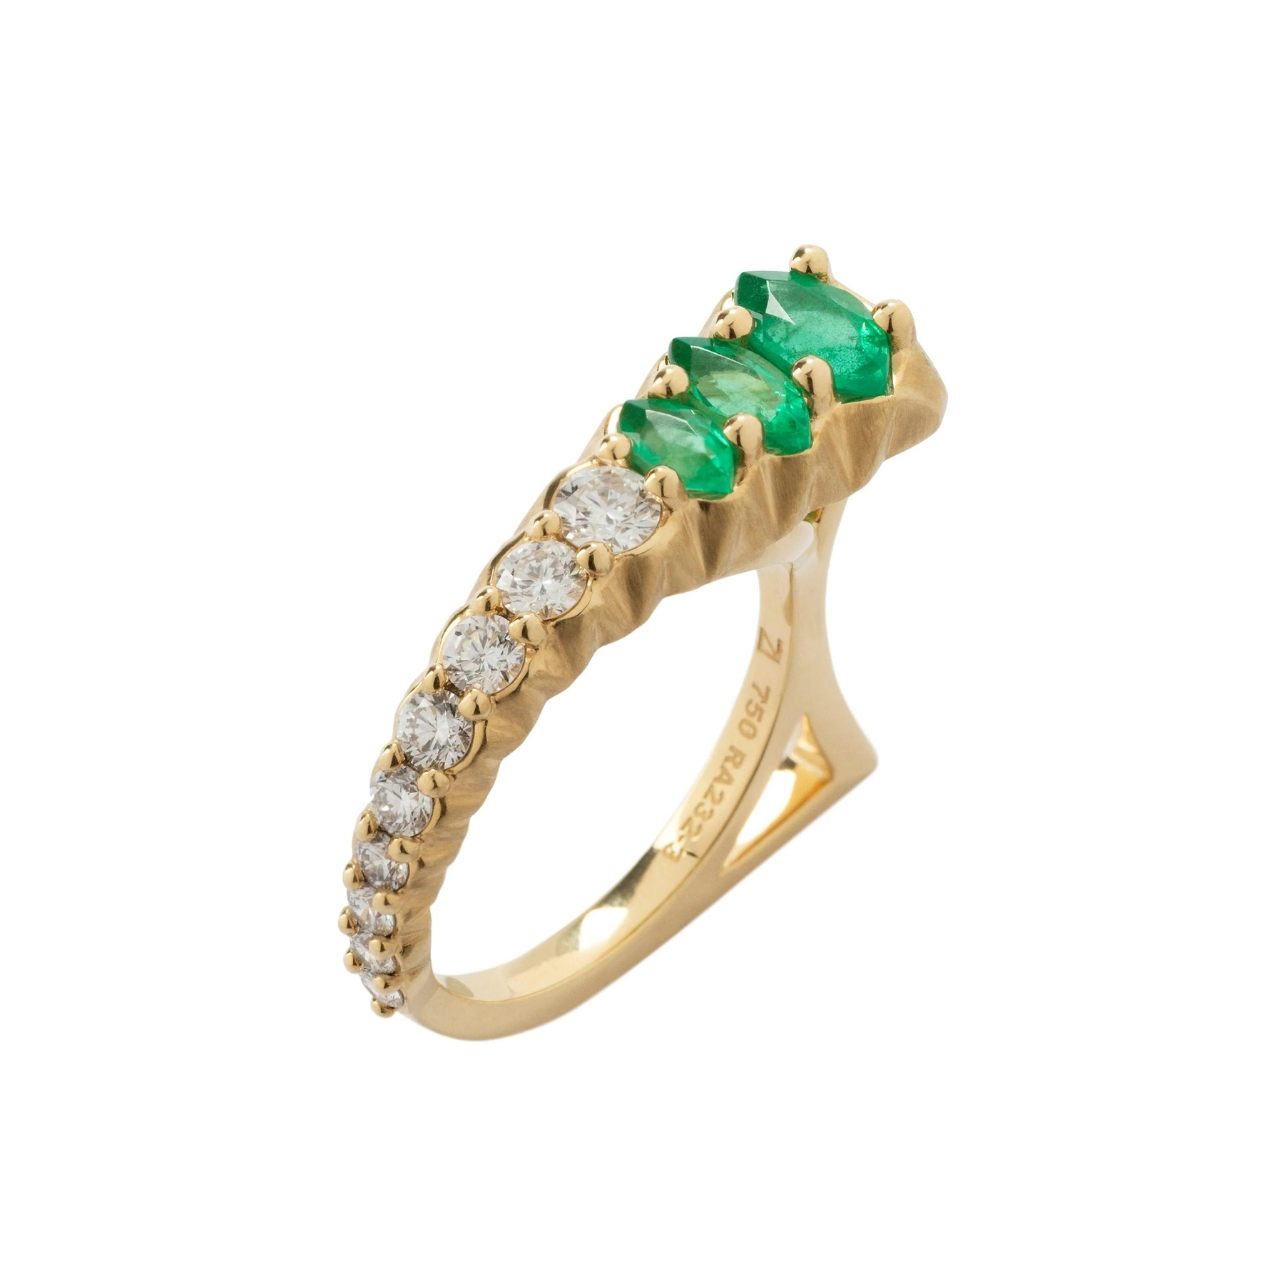 Ara Vartanian yellow gold ring with emeralds and diamonds